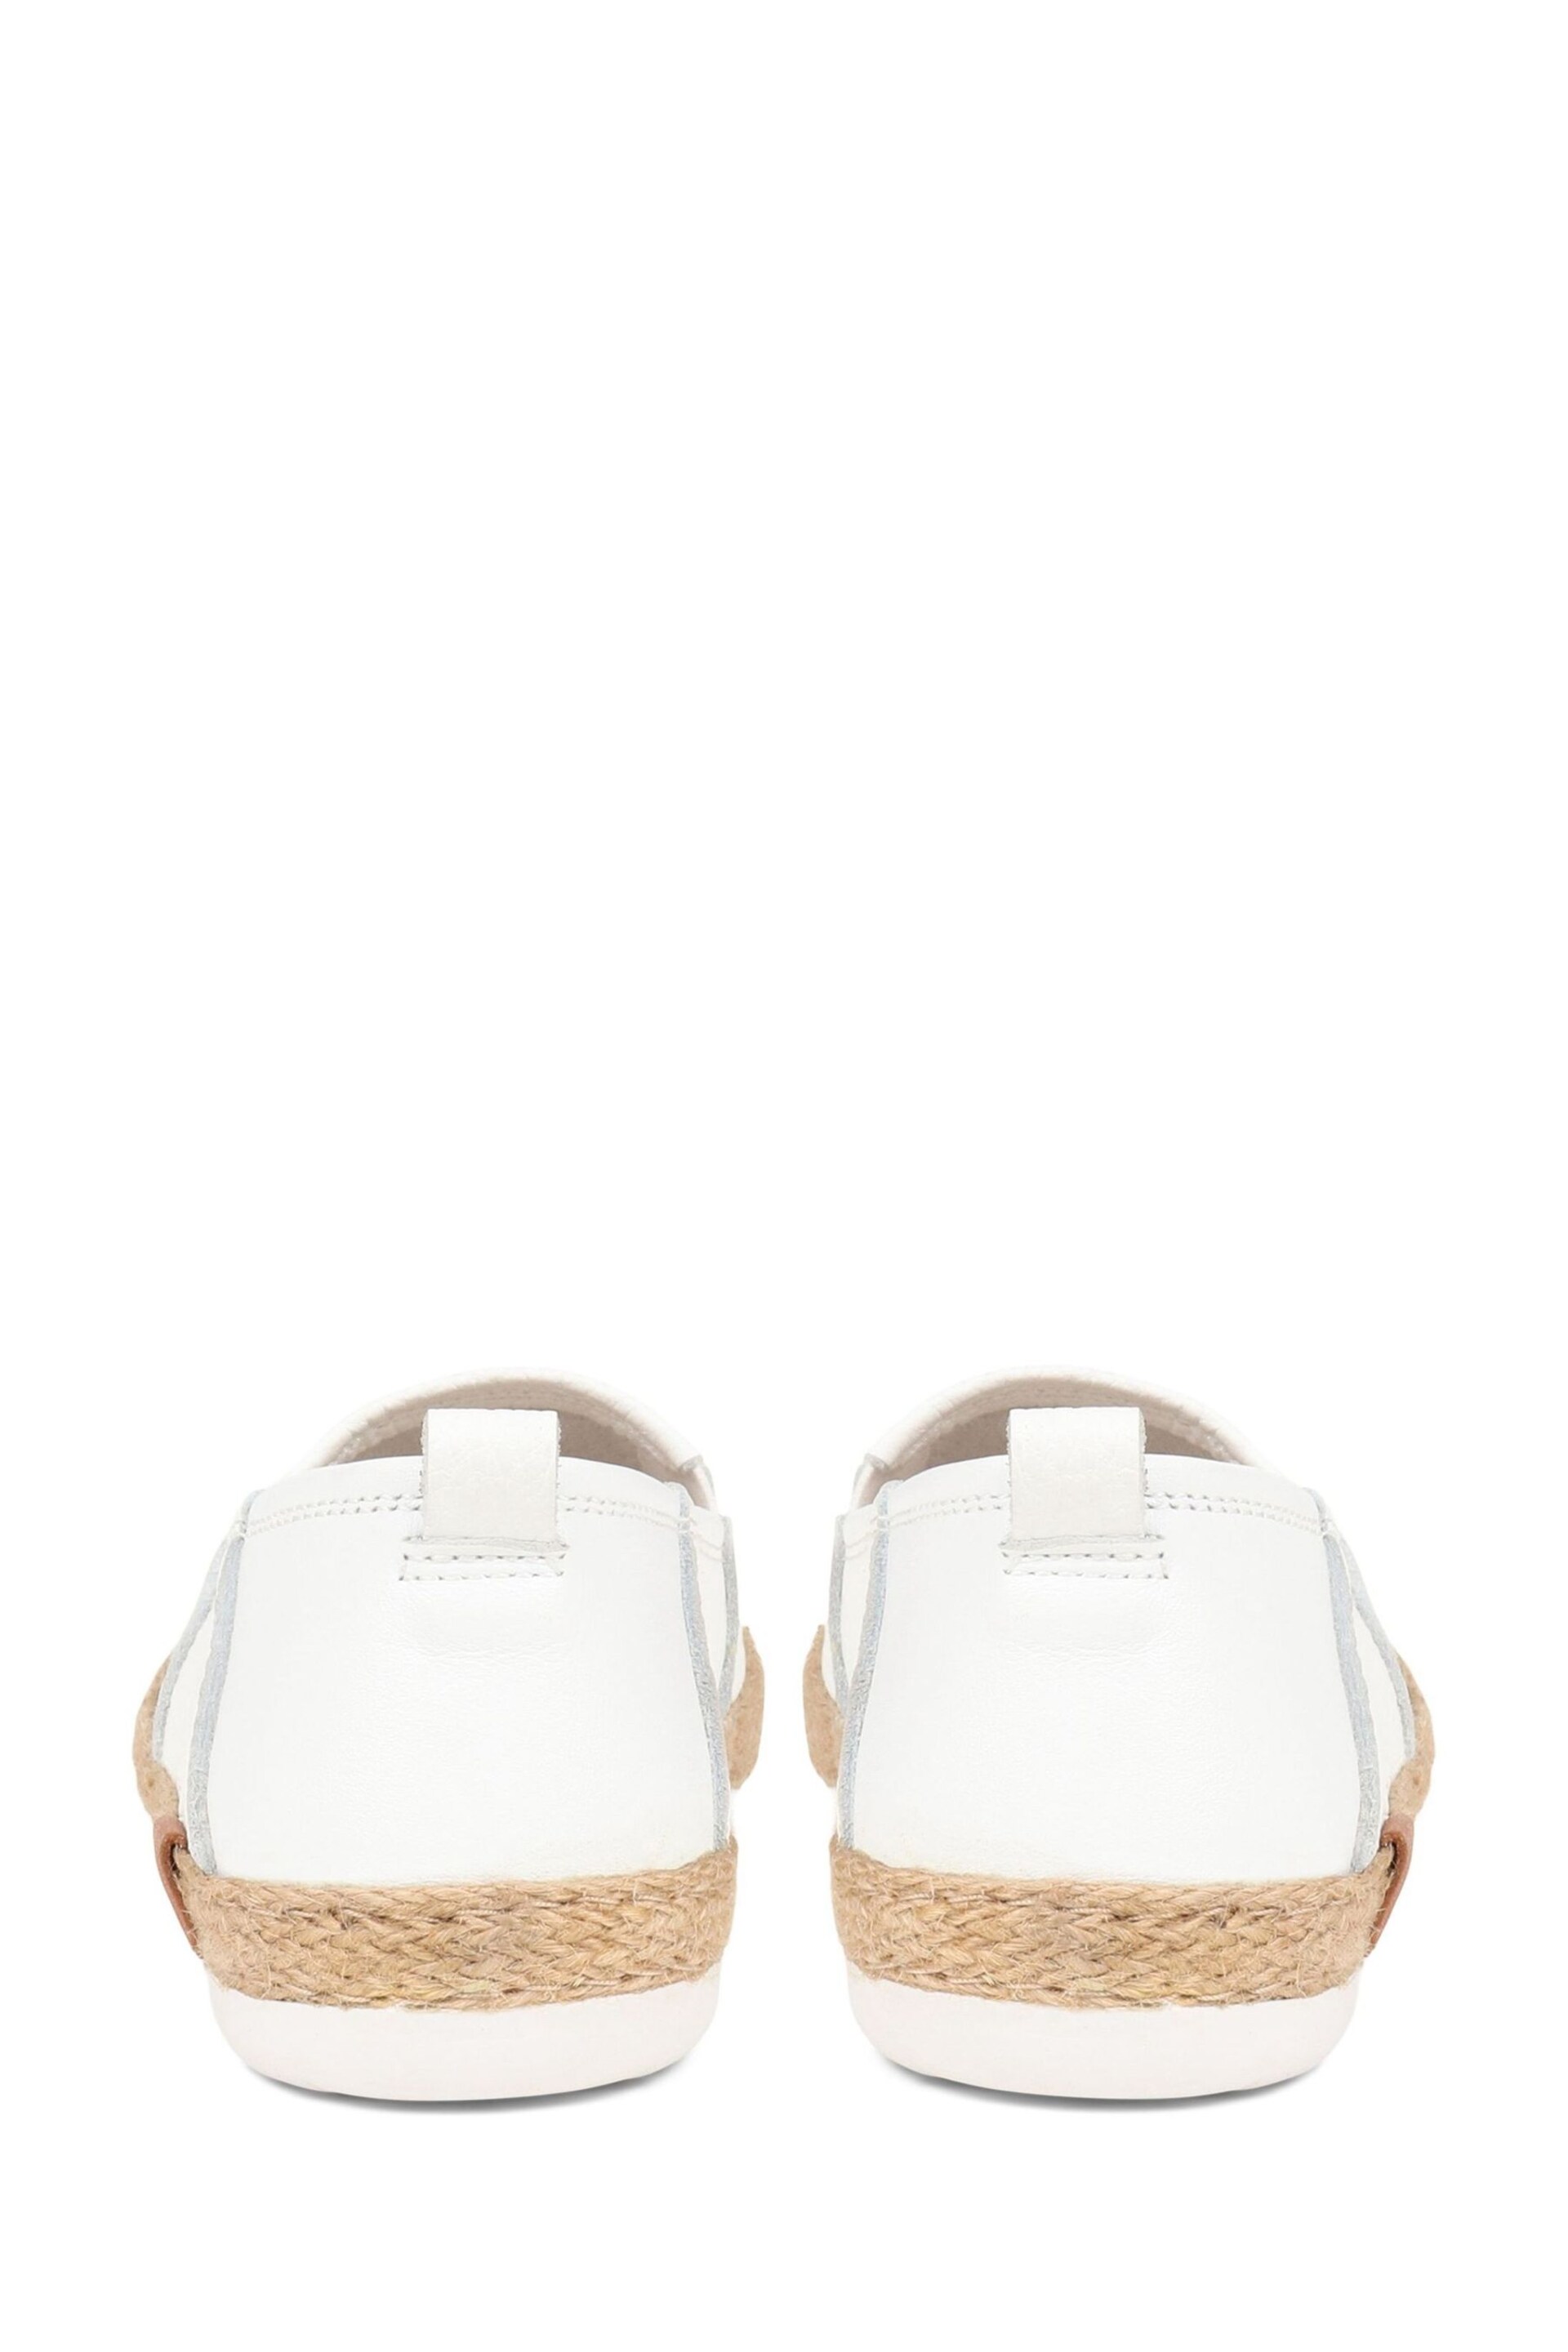 Jones Bootmaker Milan Leather Espadrille White Flats - Image 3 of 5